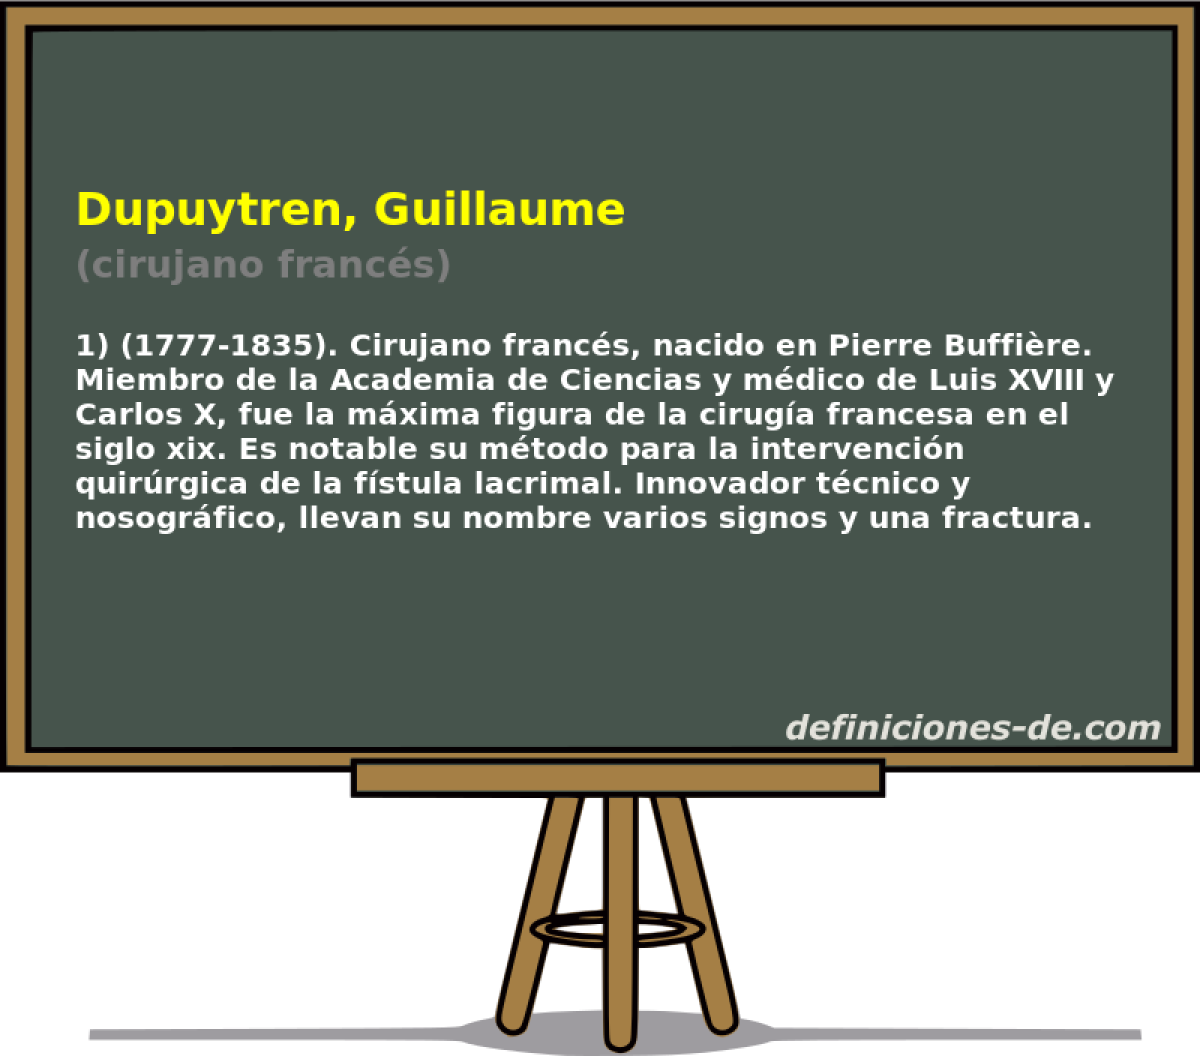 Dupuytren, Guillaume (cirujano francs)